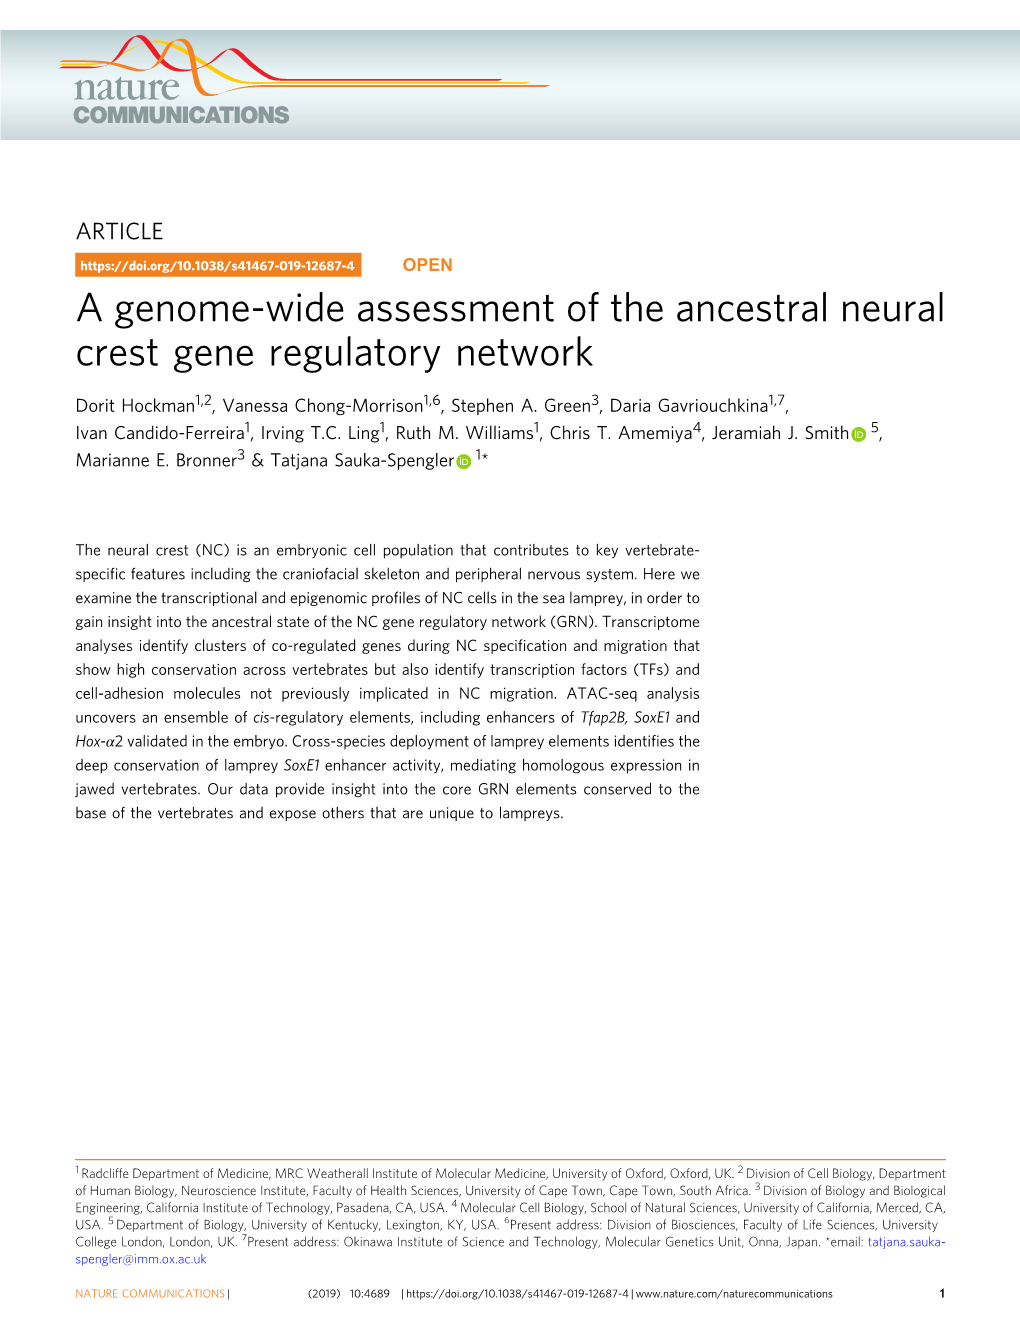 A Genome-Wide Assessment of the Ancestral Neural Crest Gene Regulatory Network